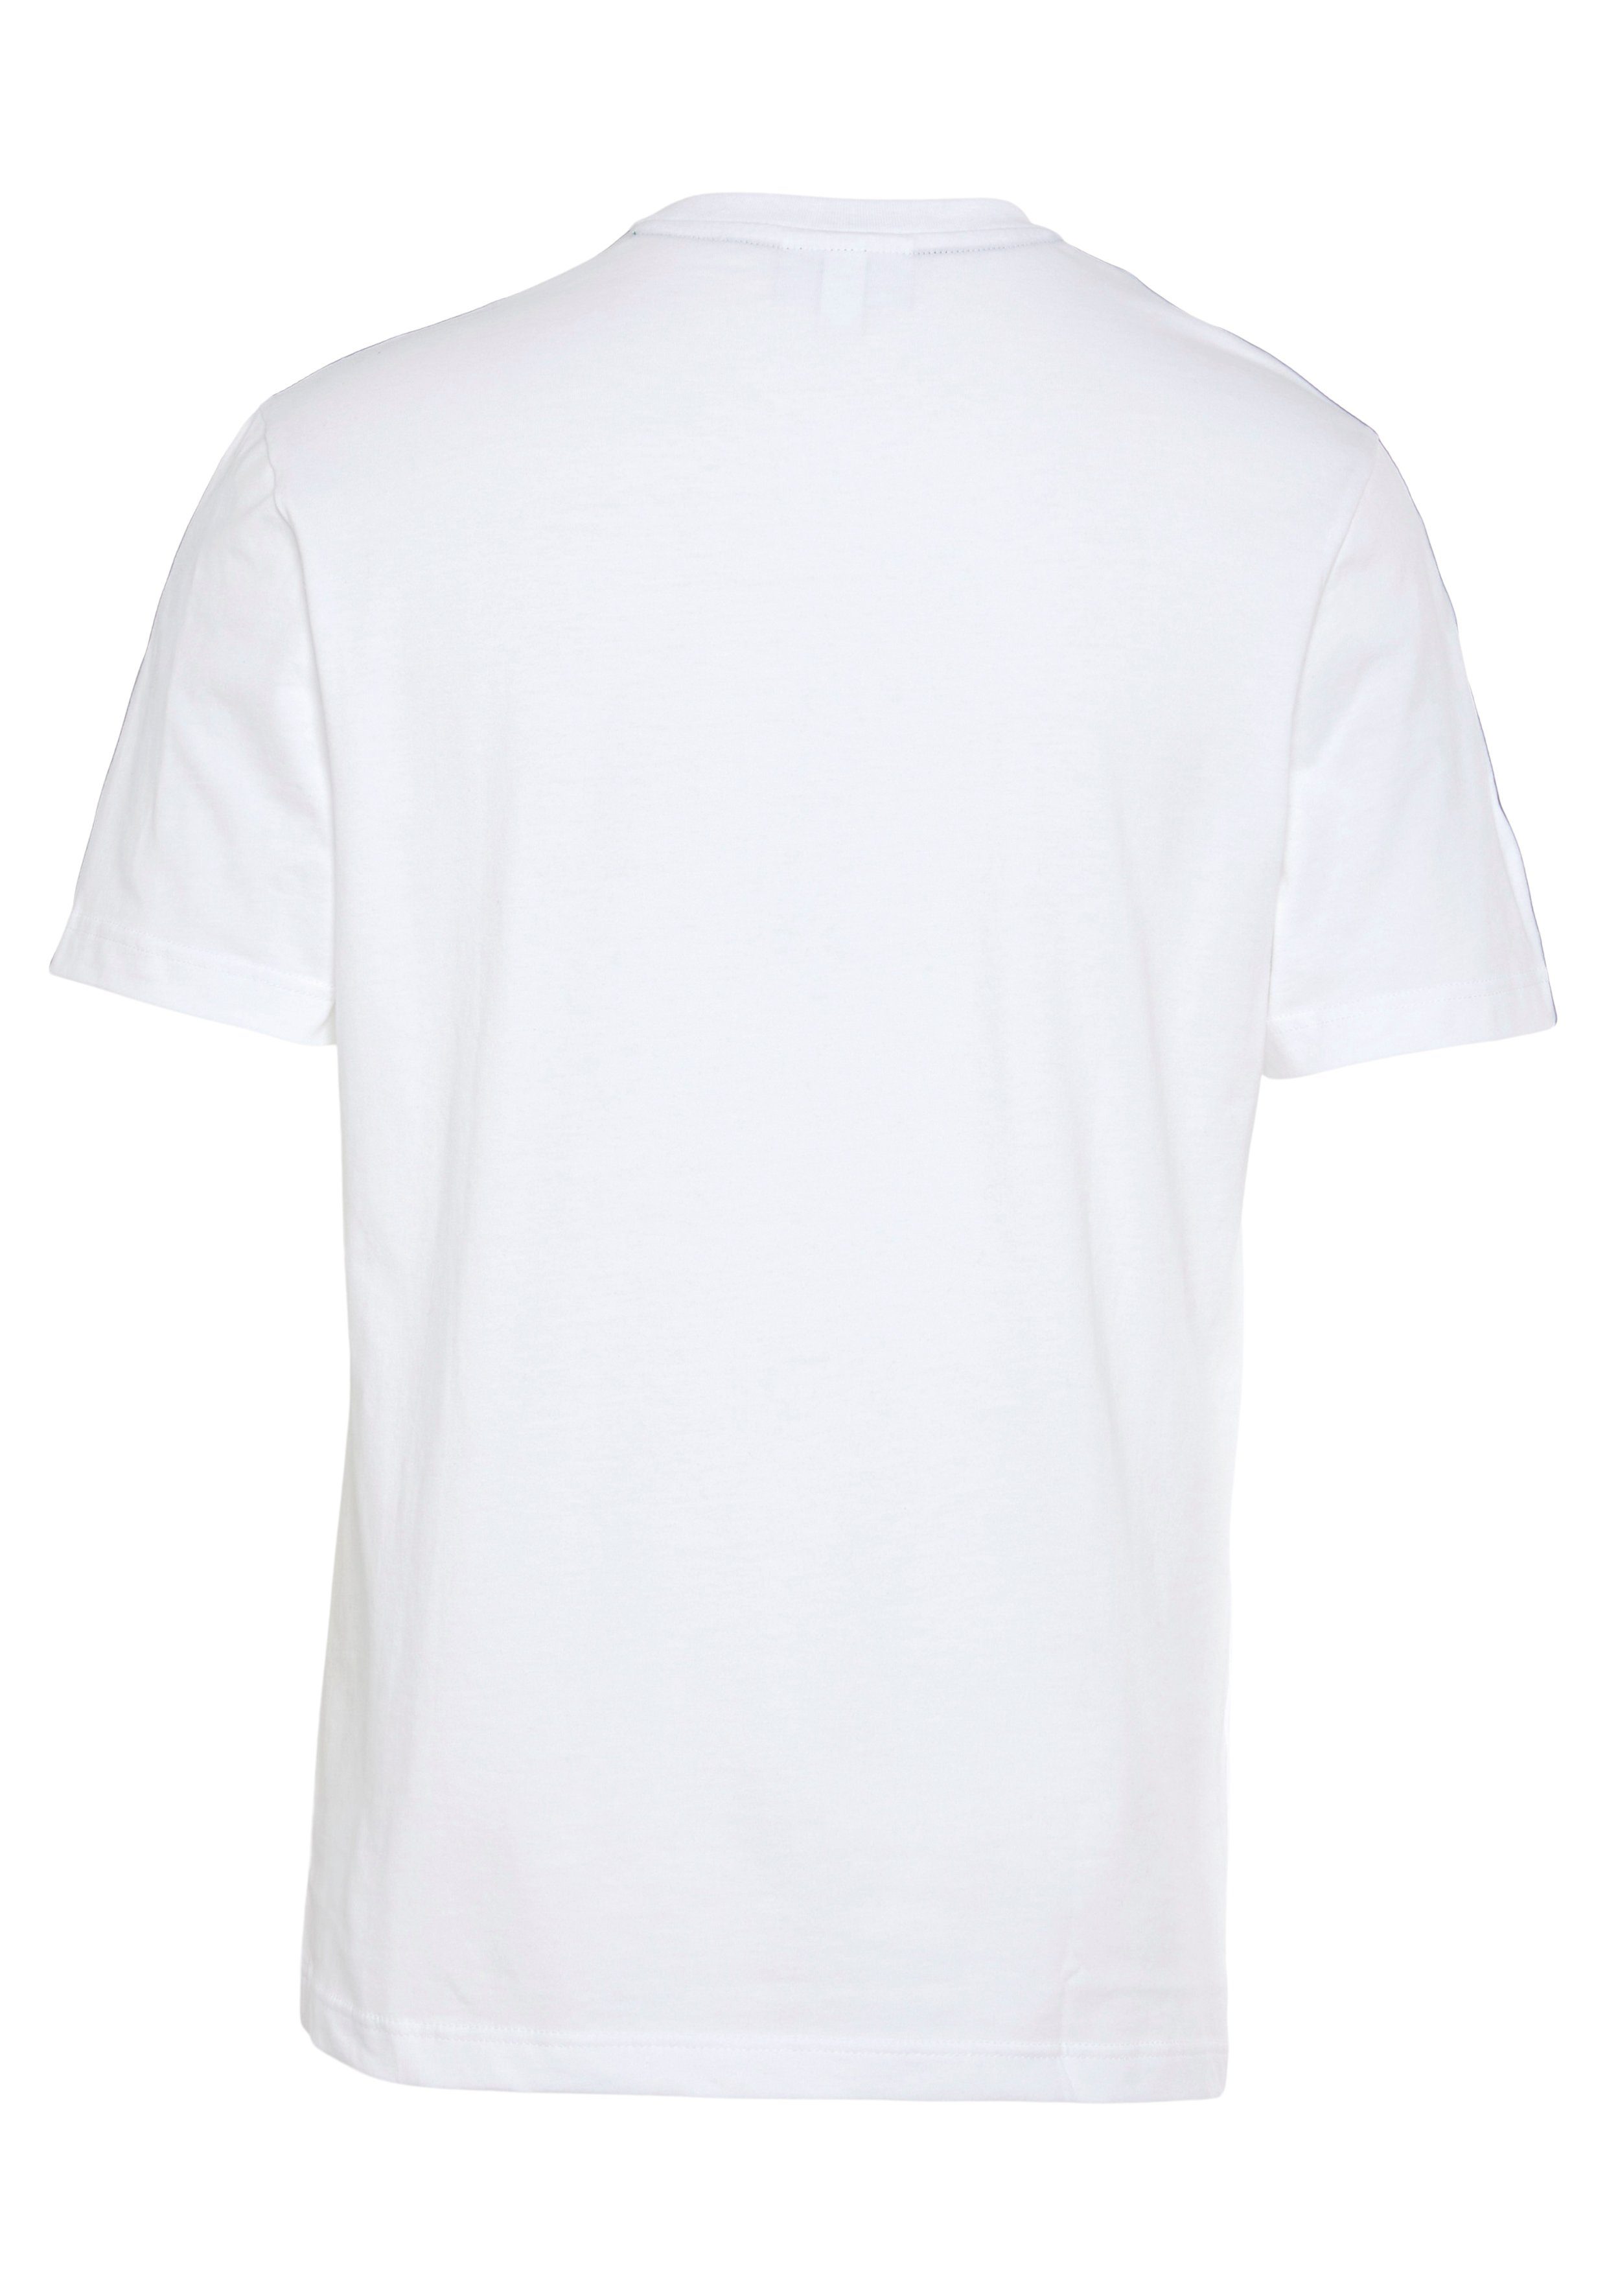 den an beschriftetem white Schultern Lacoste Kontrastband mit T-Shirt